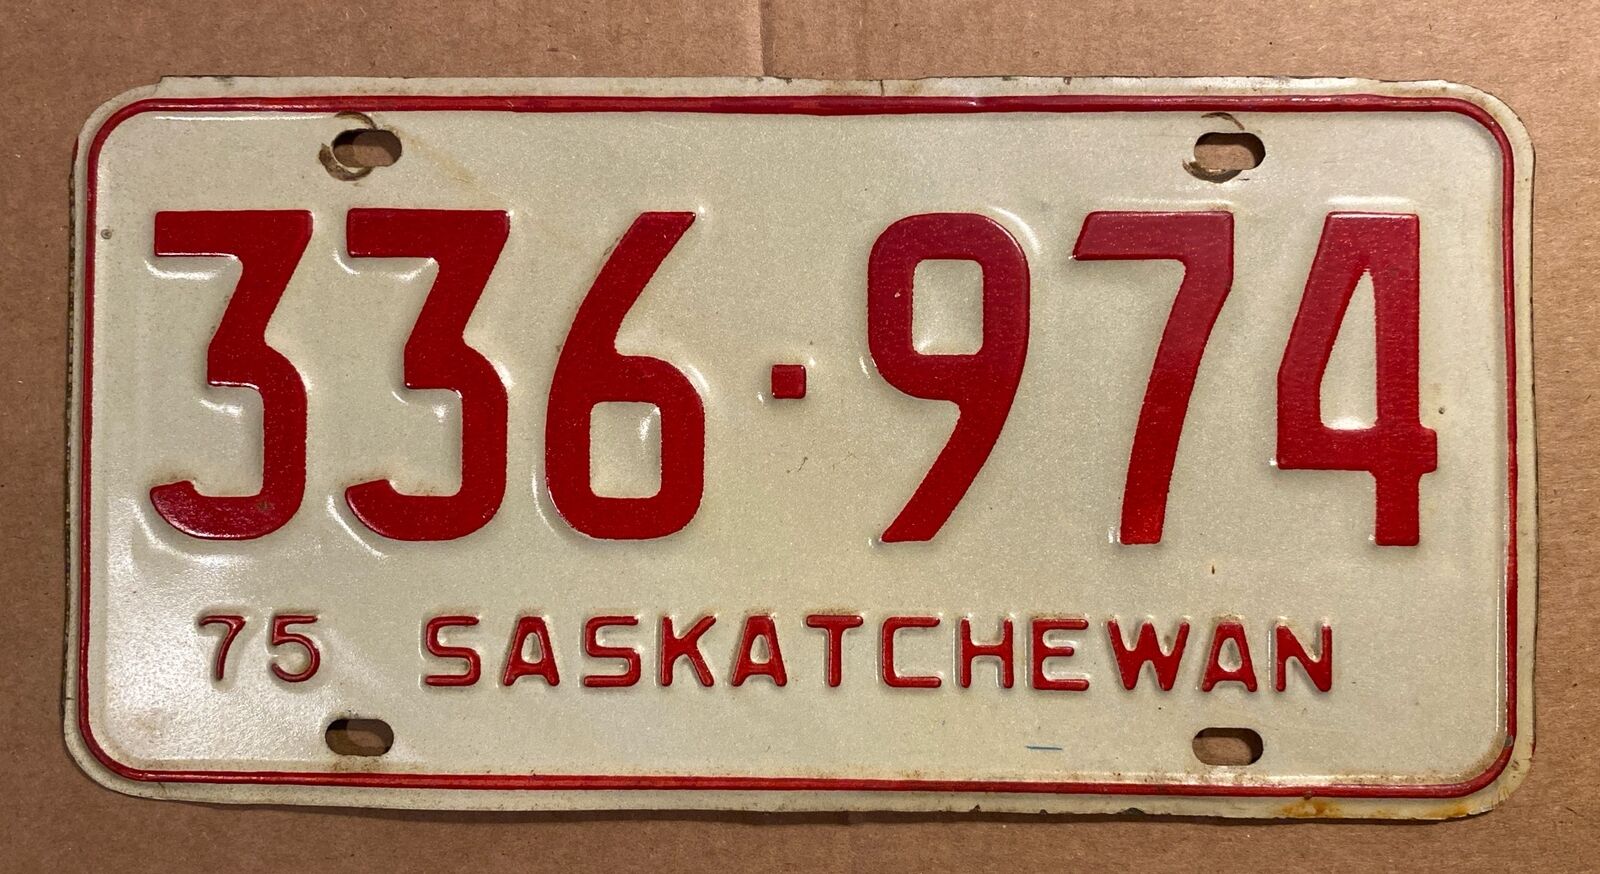 1975 Saskatchewan Canada license plate, original used